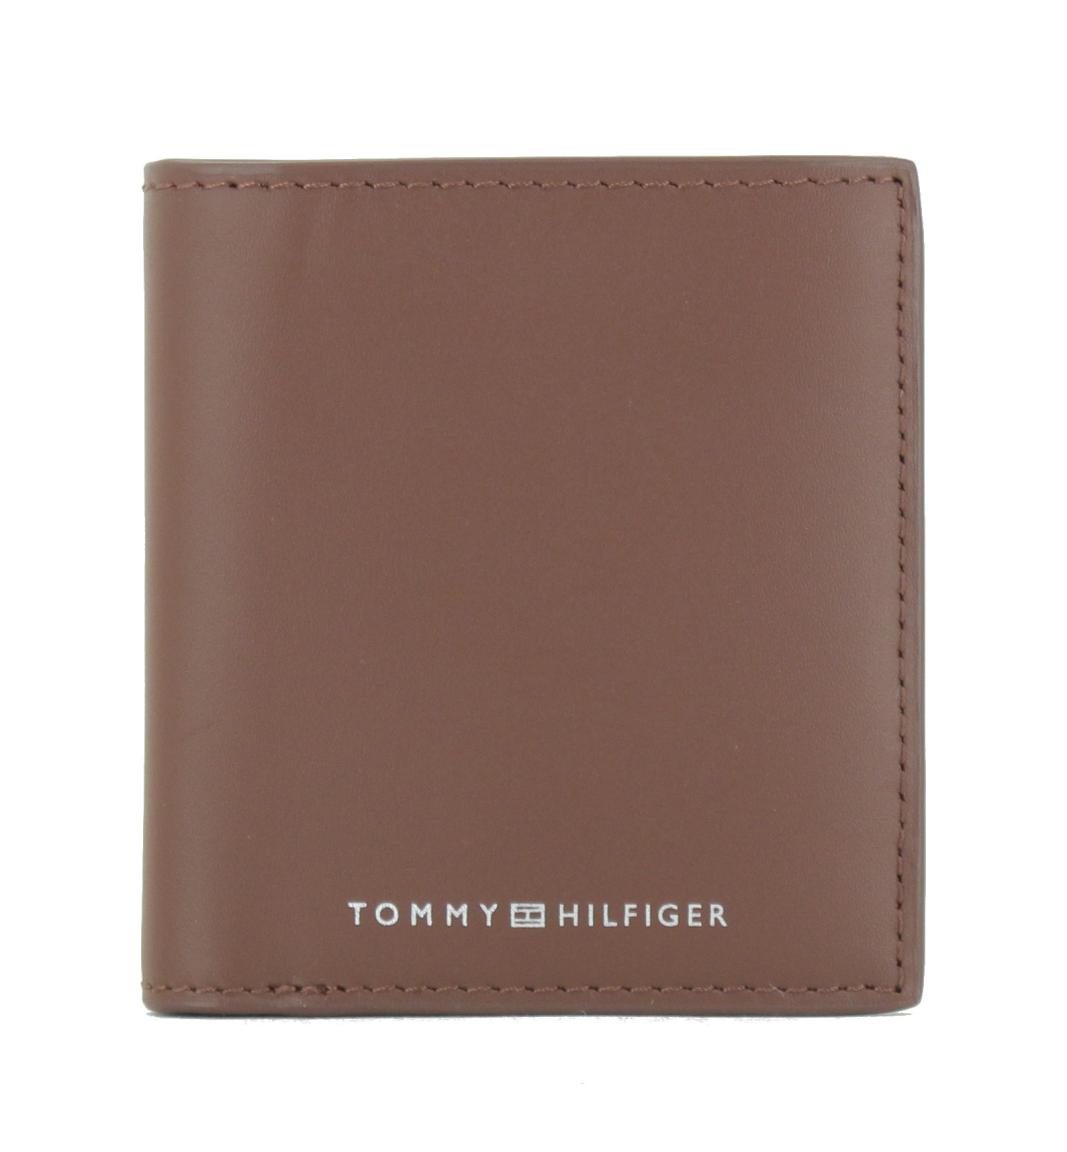 Tommy Hilfiger Herrenbörse Modern Leather Trifold Tan braun